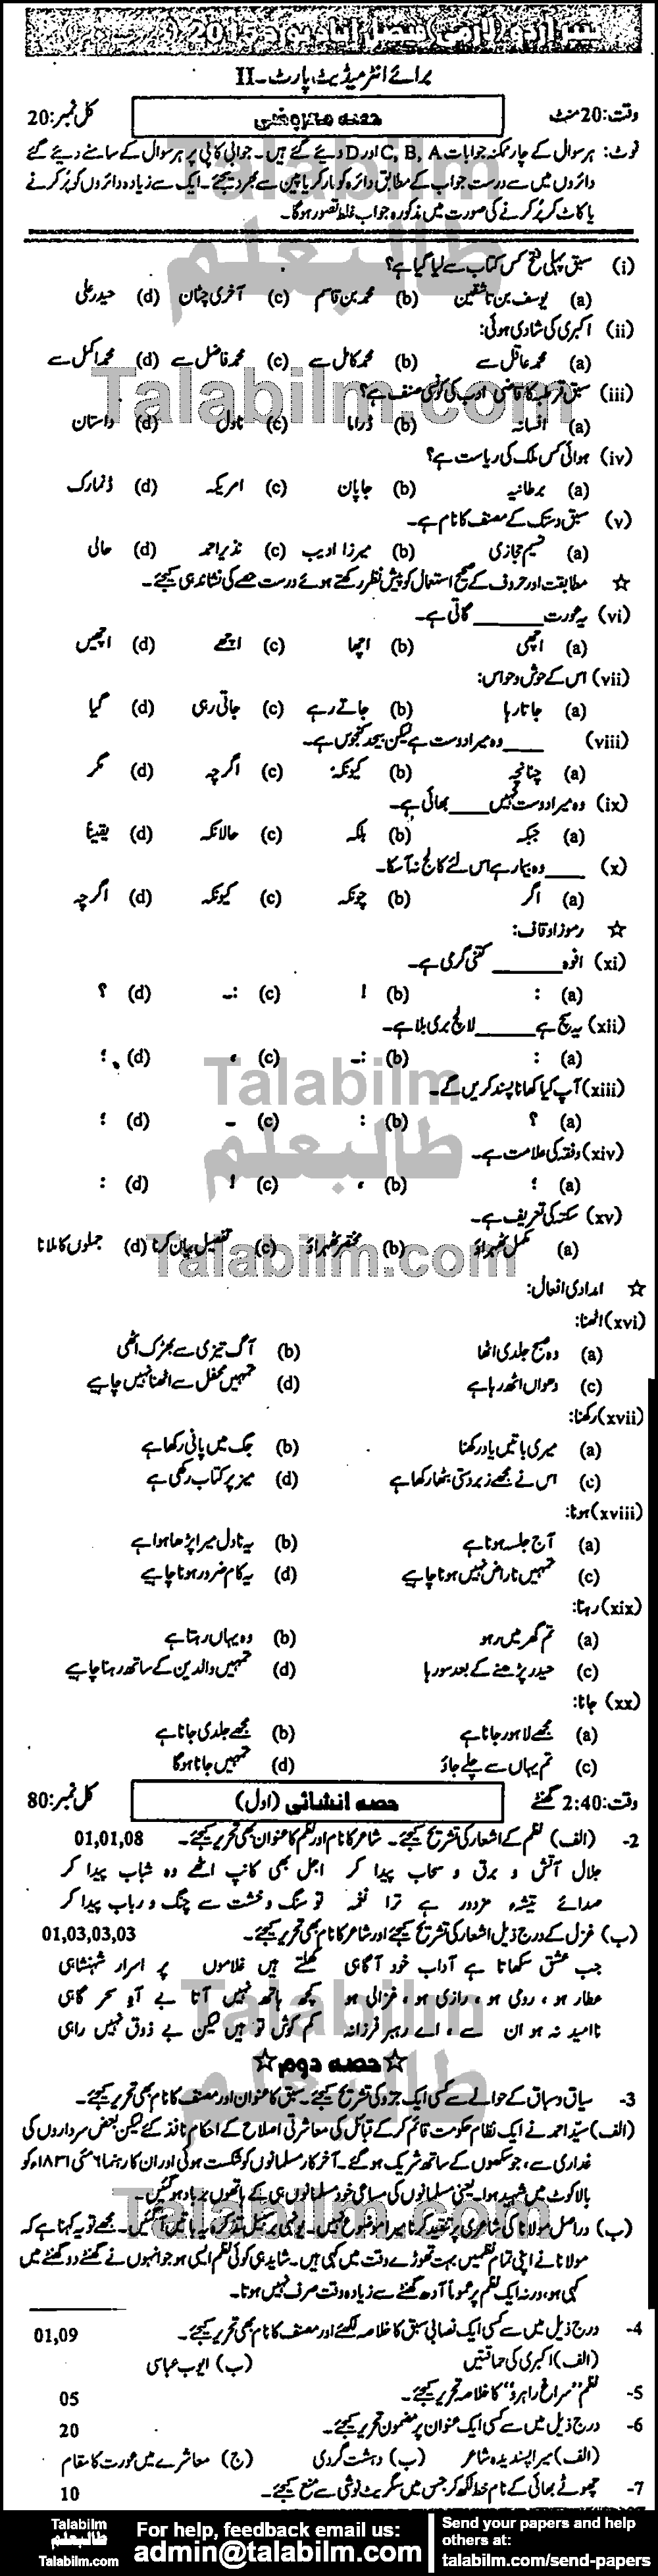 Urdu 0 past paper for Group-II 2015